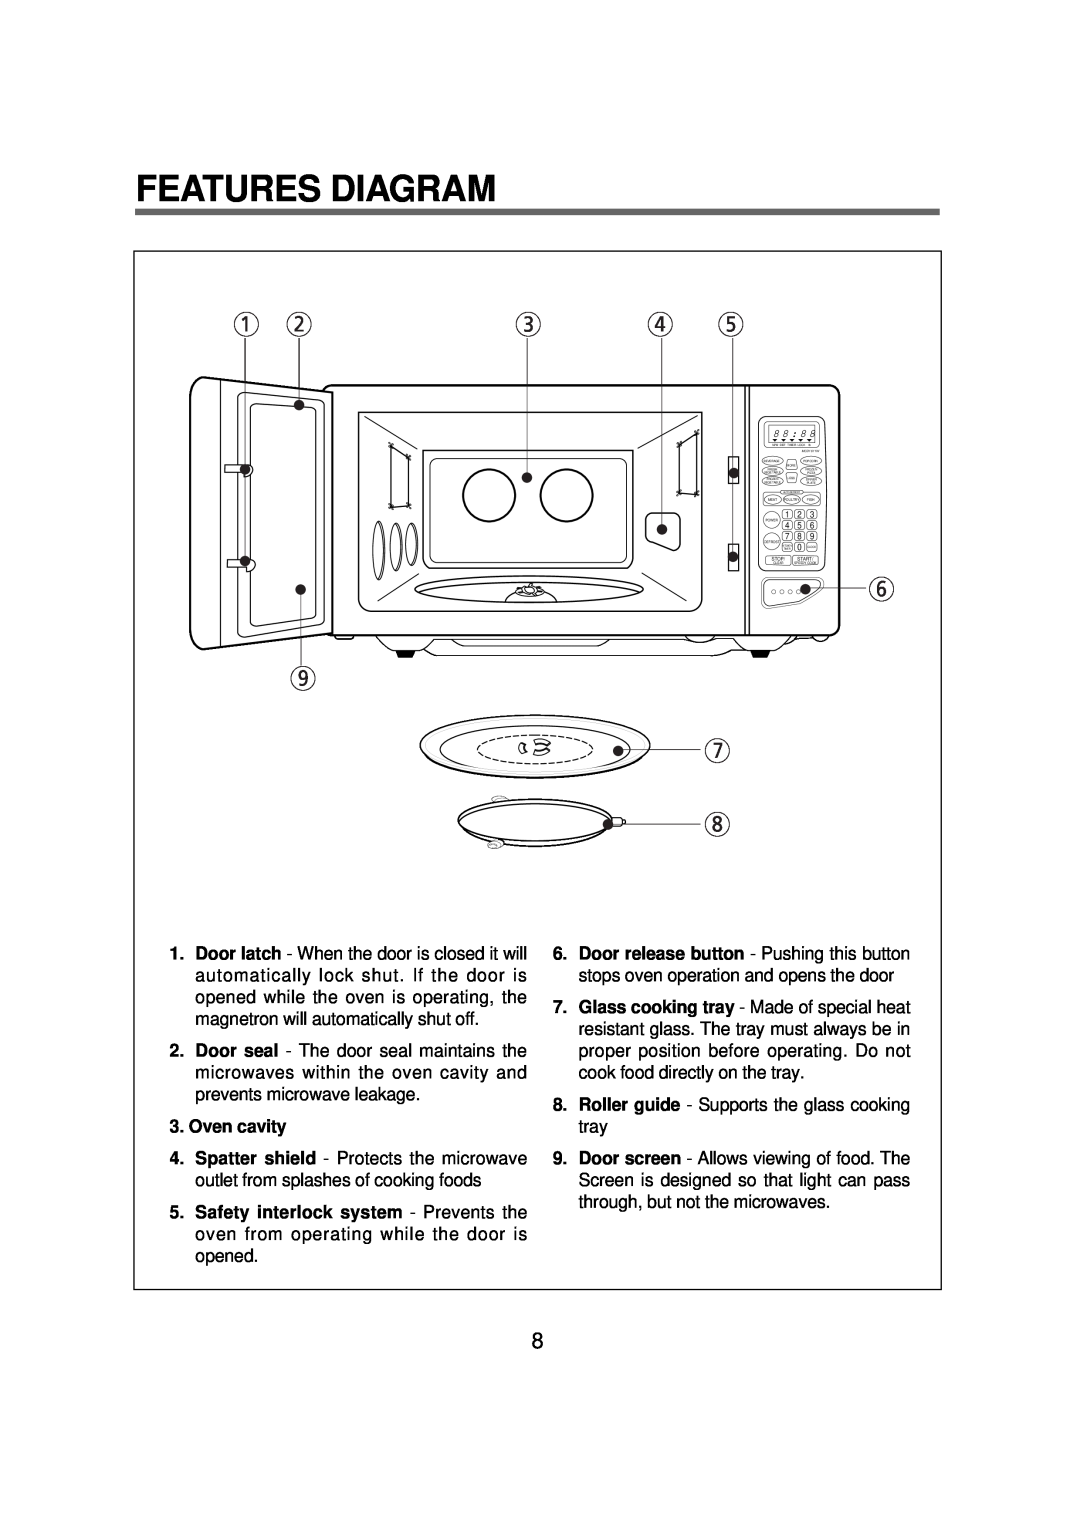 Magic Chef MCD1611B manual Features Diagram, Oven cavity 